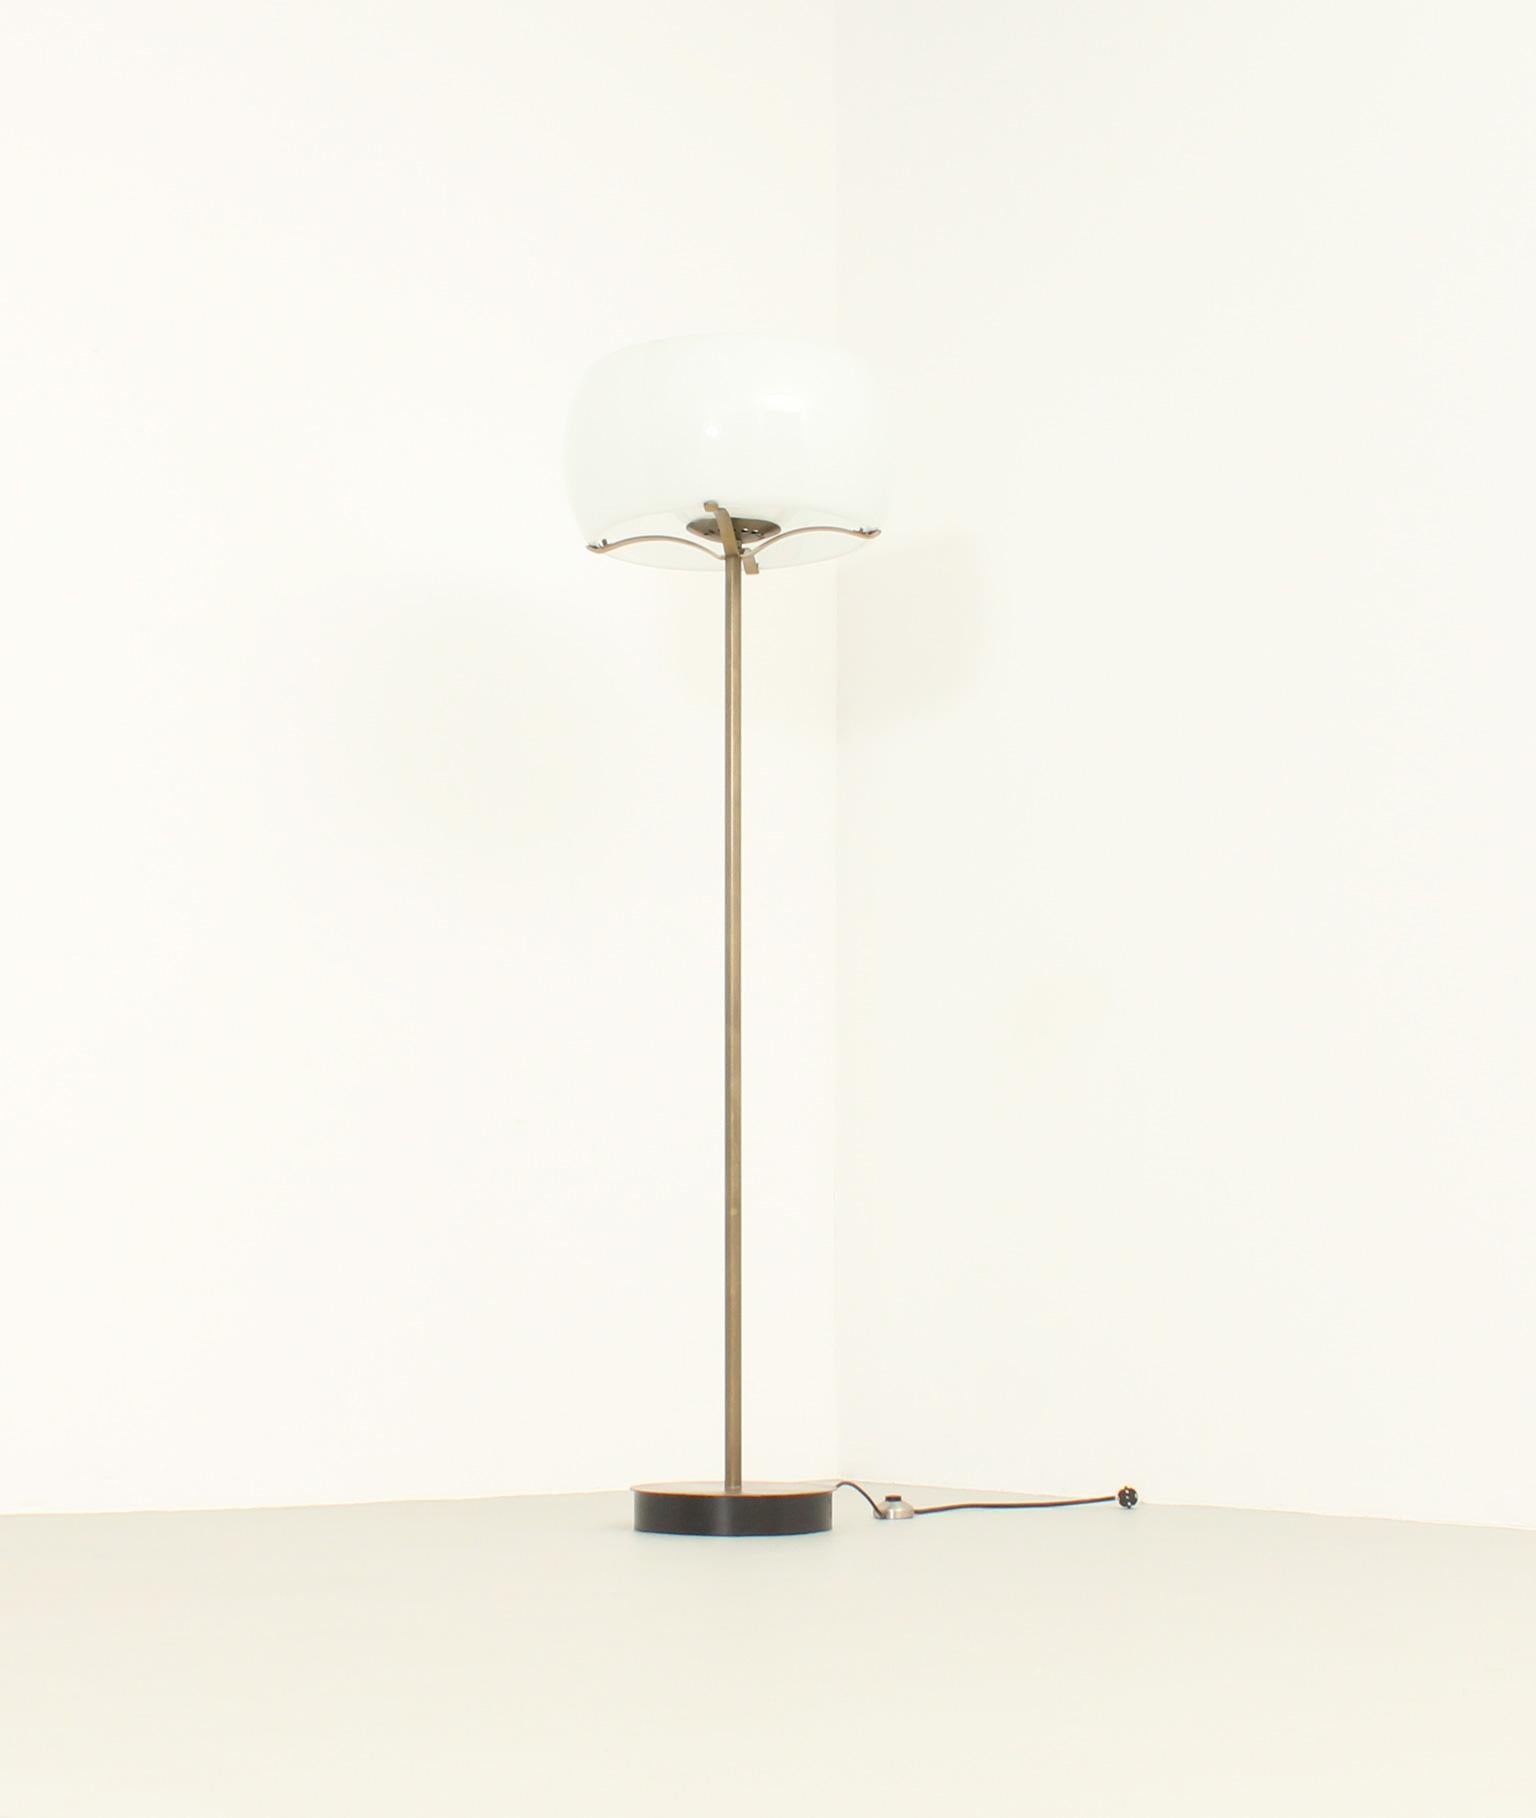 Clitunno Floor Lamp in Bronze Edition by Vico Magistretti for Artemide, 1963 For Sale 2